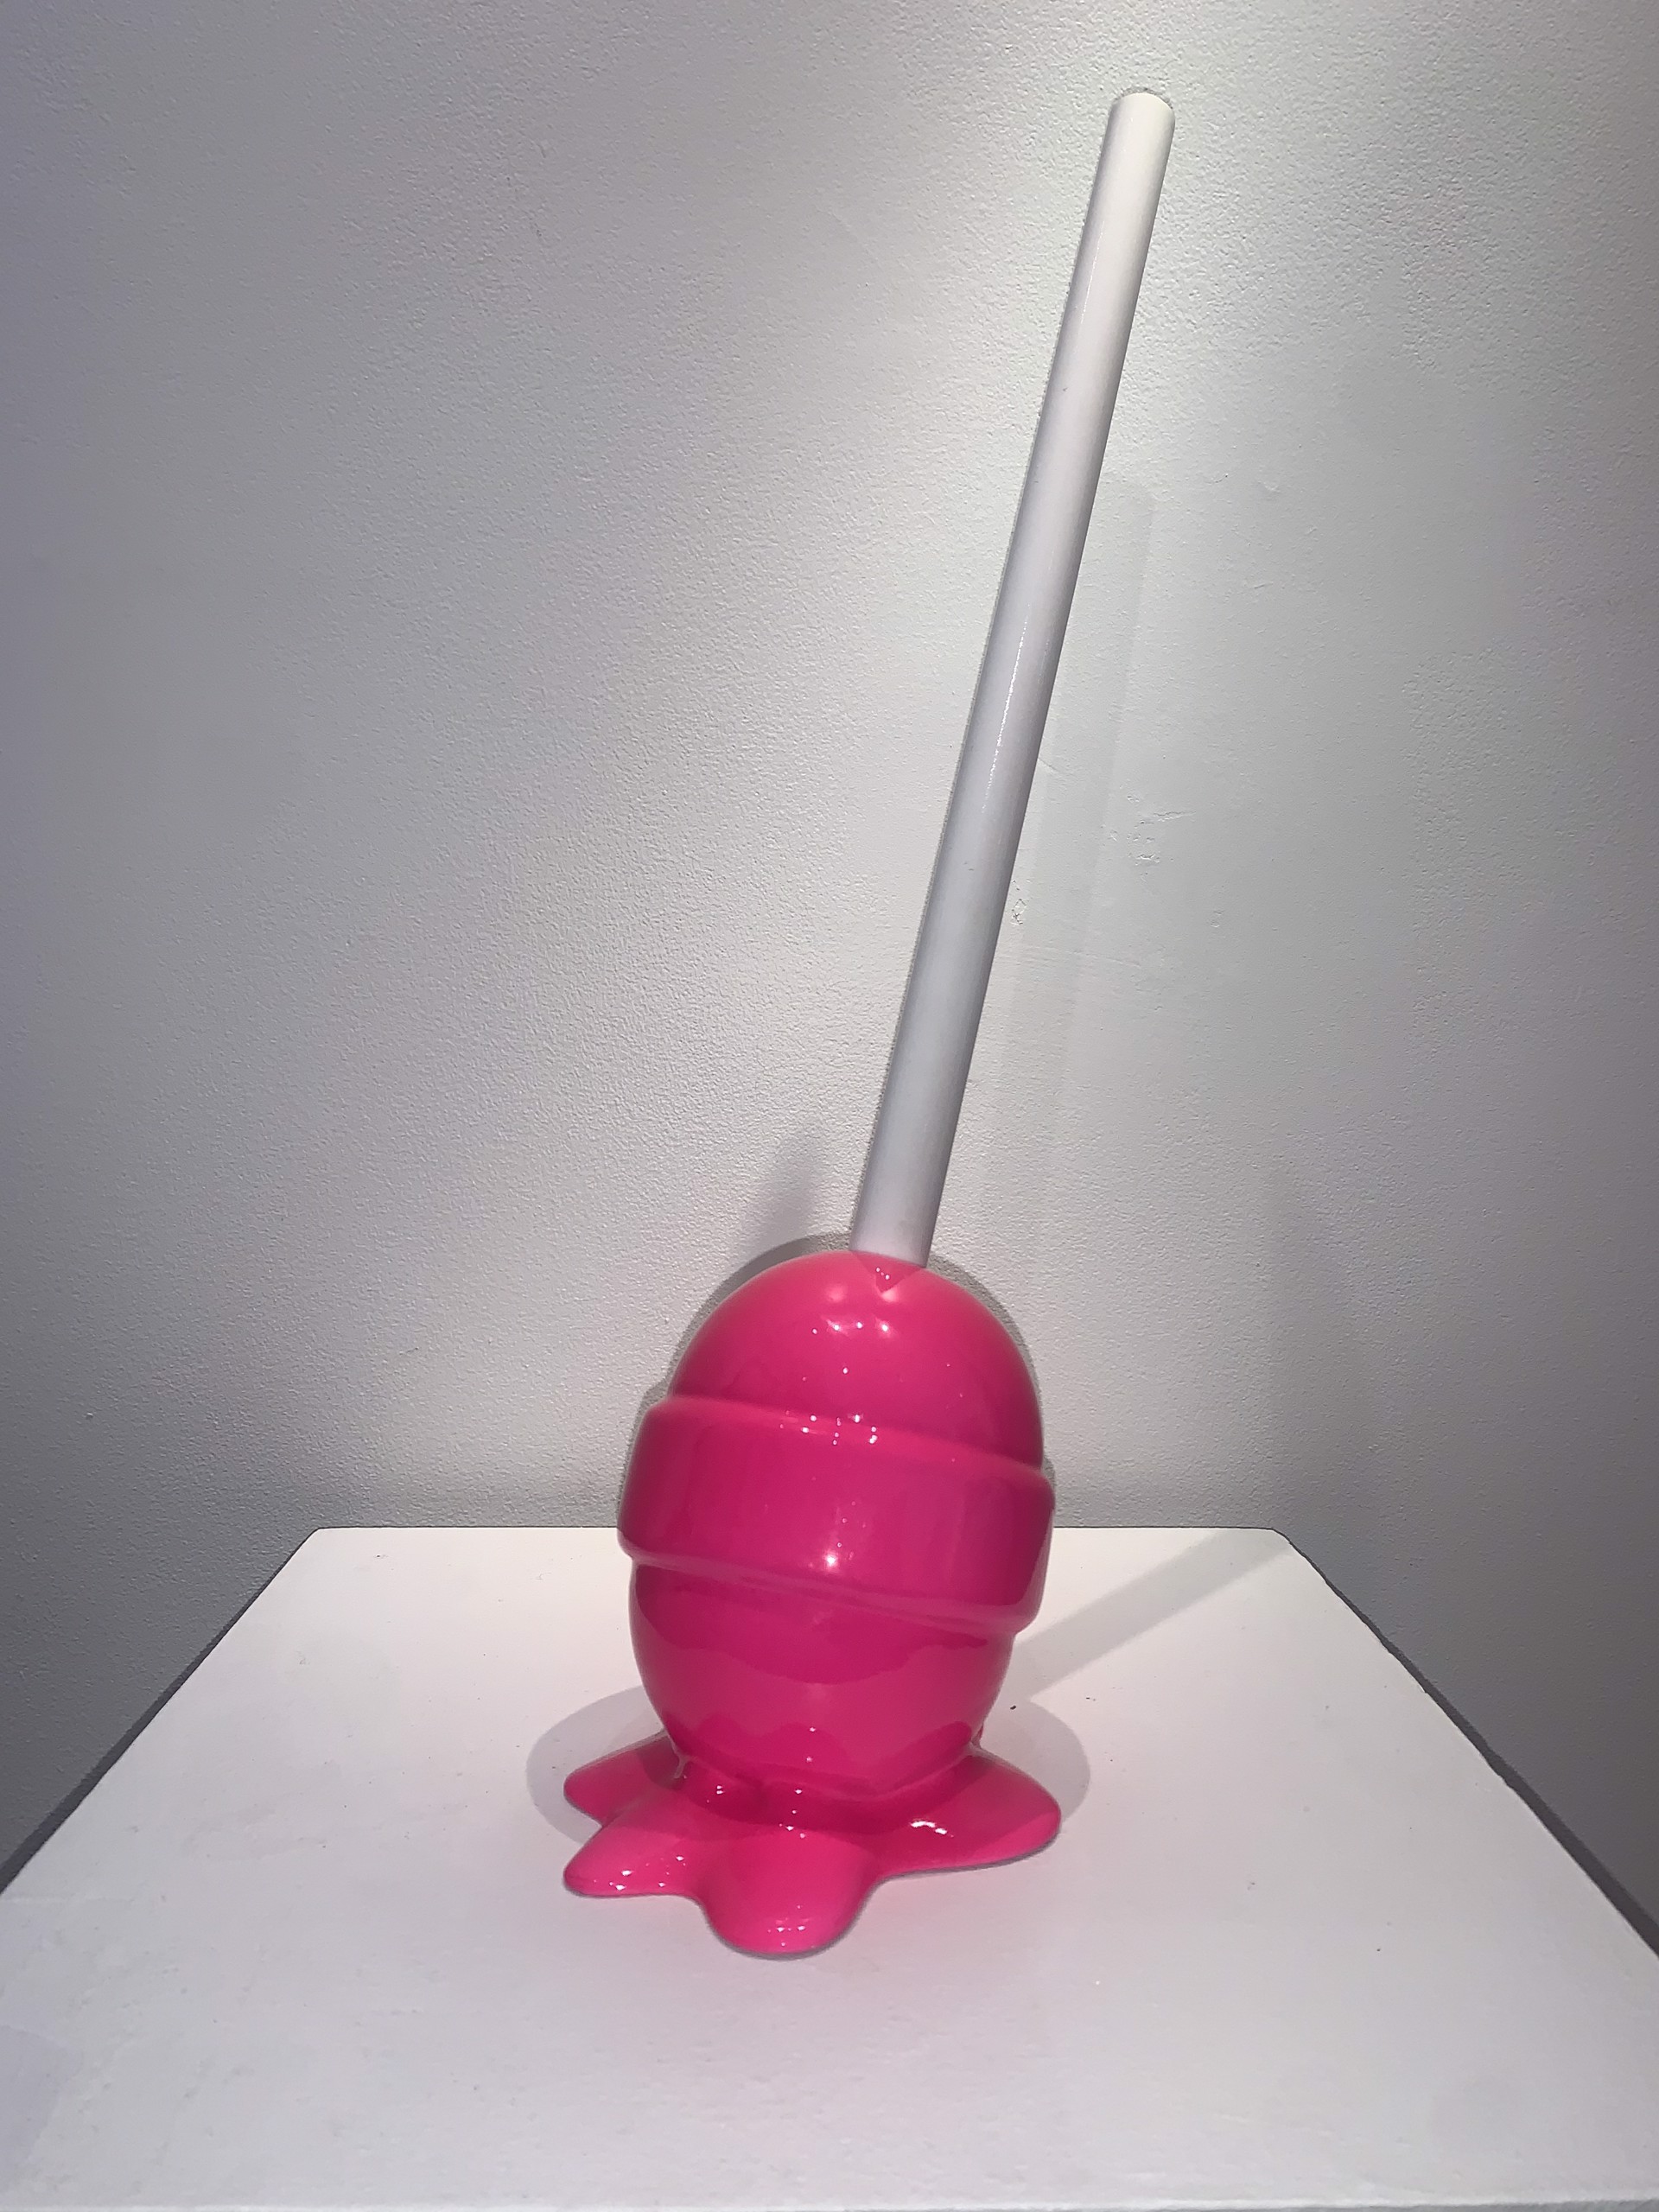 The Sweet Life Hot Pink Lollipop by Elena Bulatova